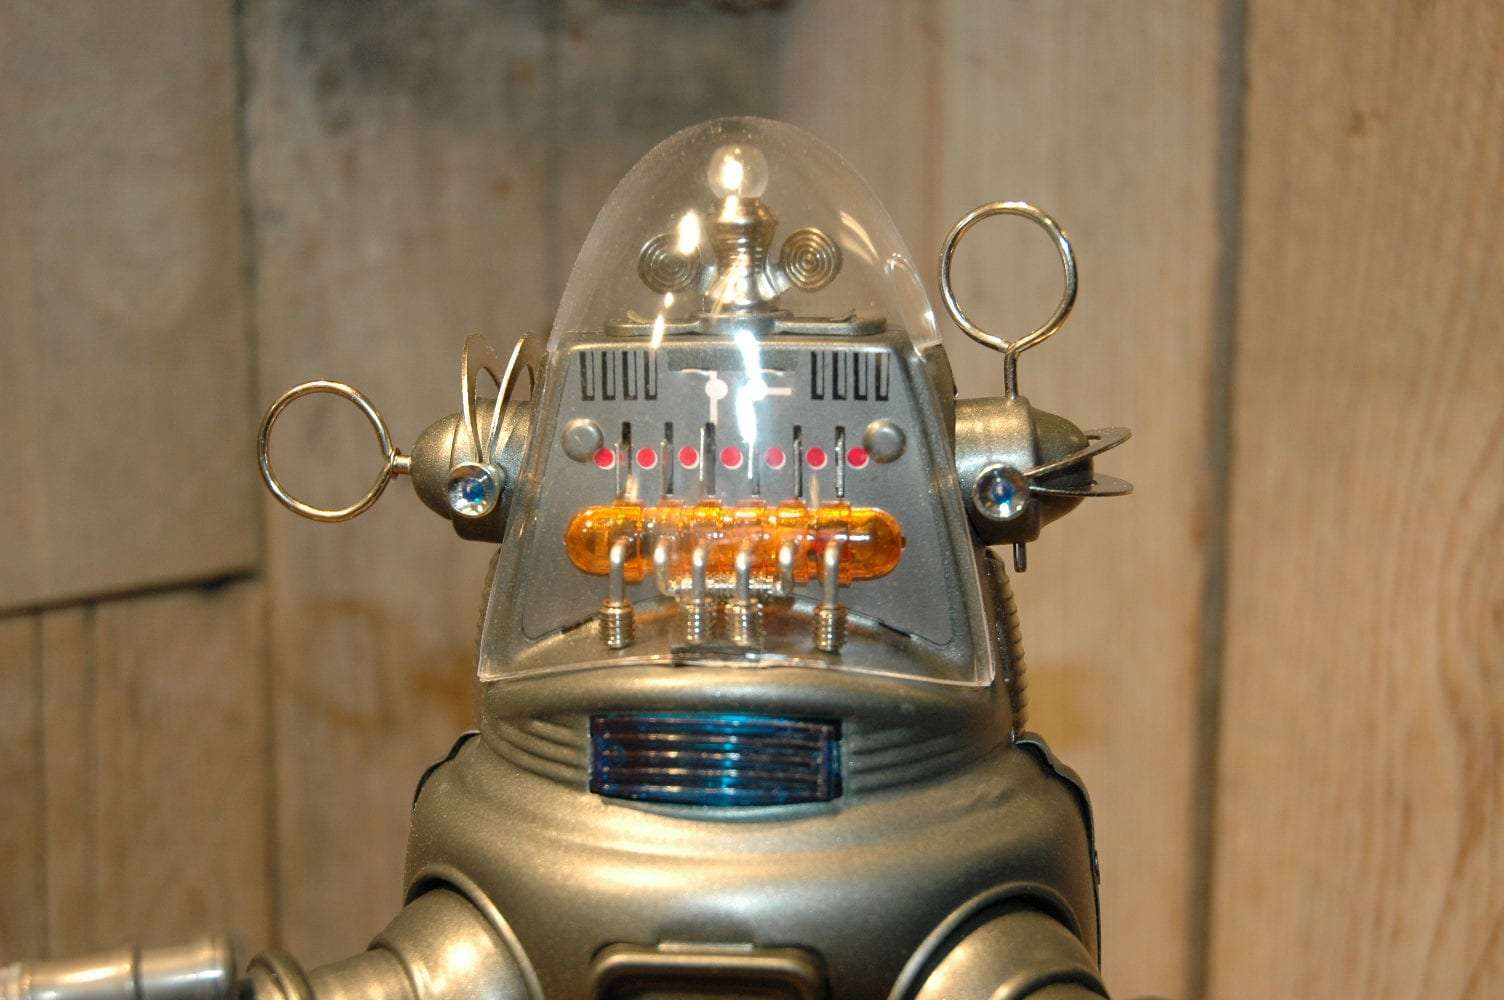 Osaka Tin Toy Institute - Robby The Robot.